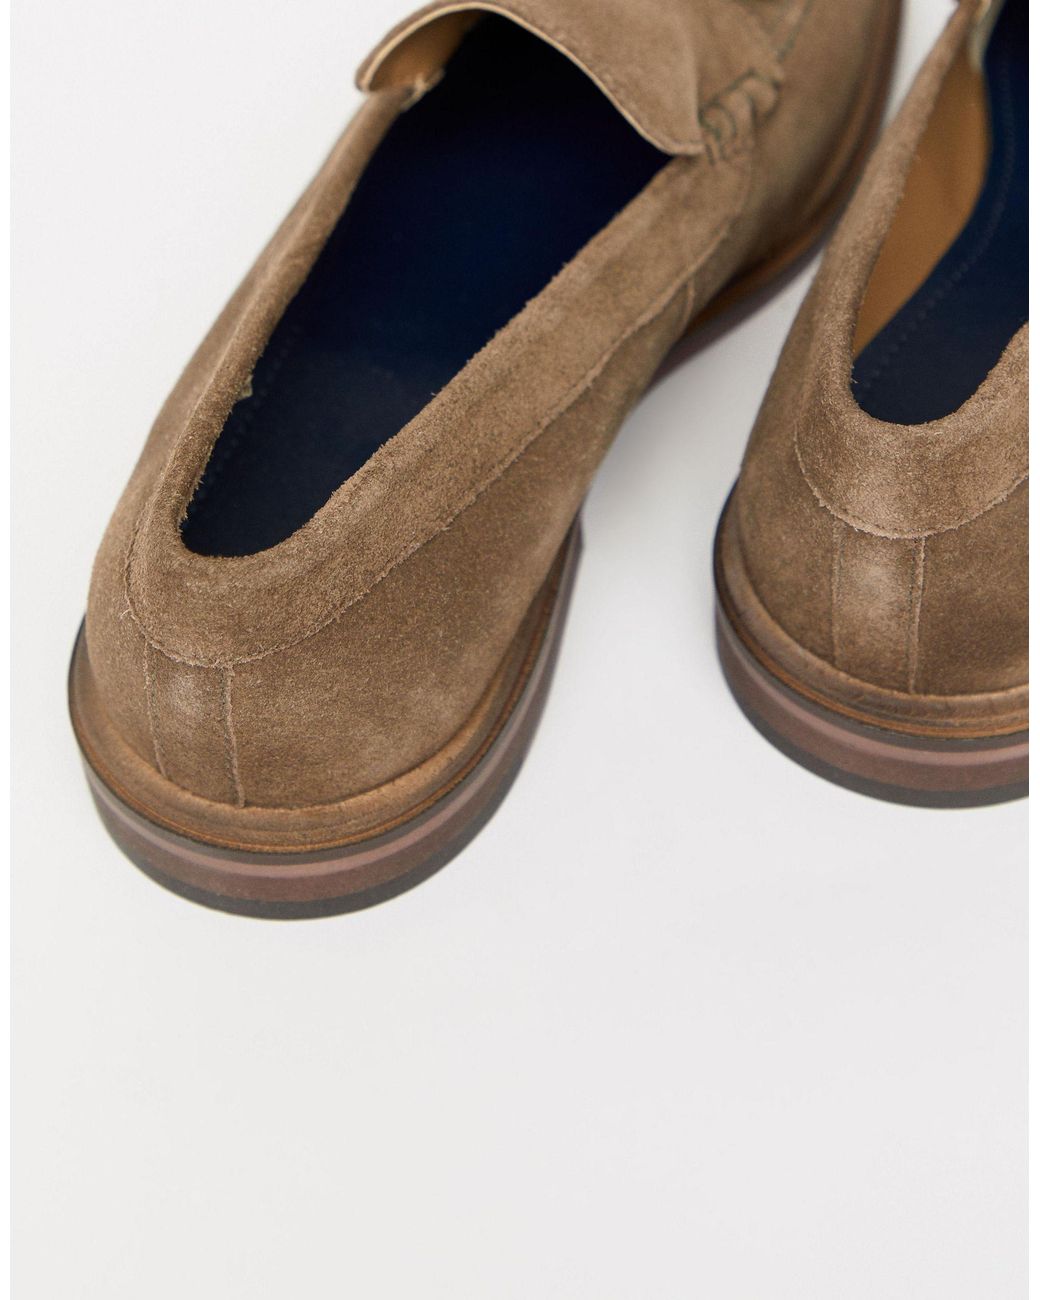 Walk London West Tassel Loafers on Sale, SAVE 42% - raptorunderlayment.com